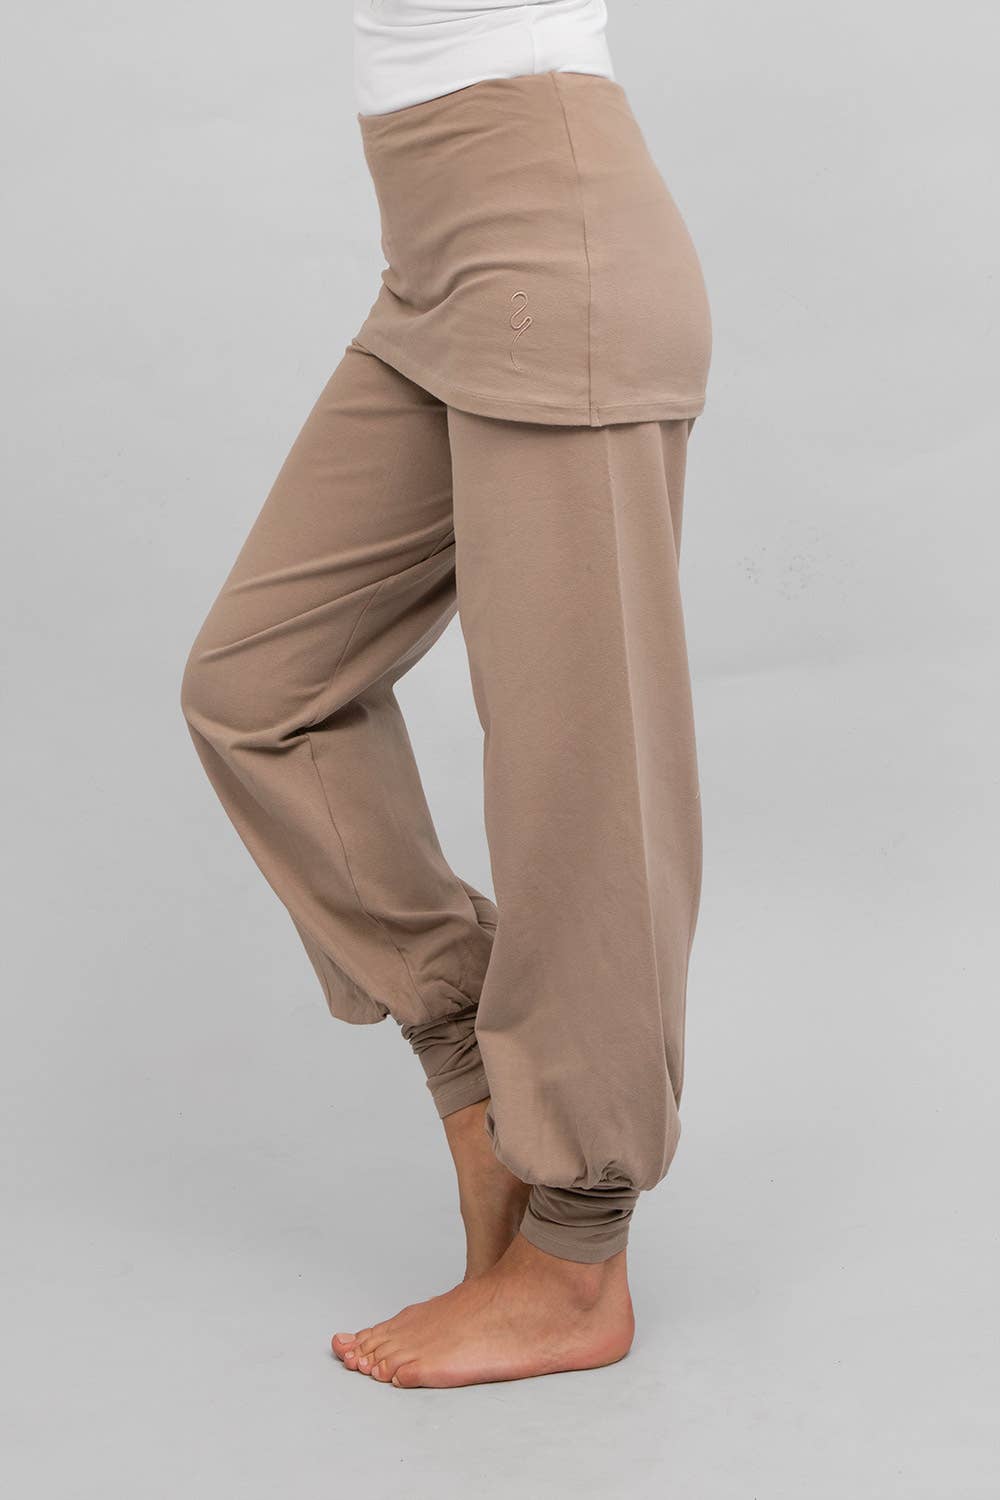 Kundalini Yoga Pant  Yoga pants loose, Cotton yoga pants, Yoga pants